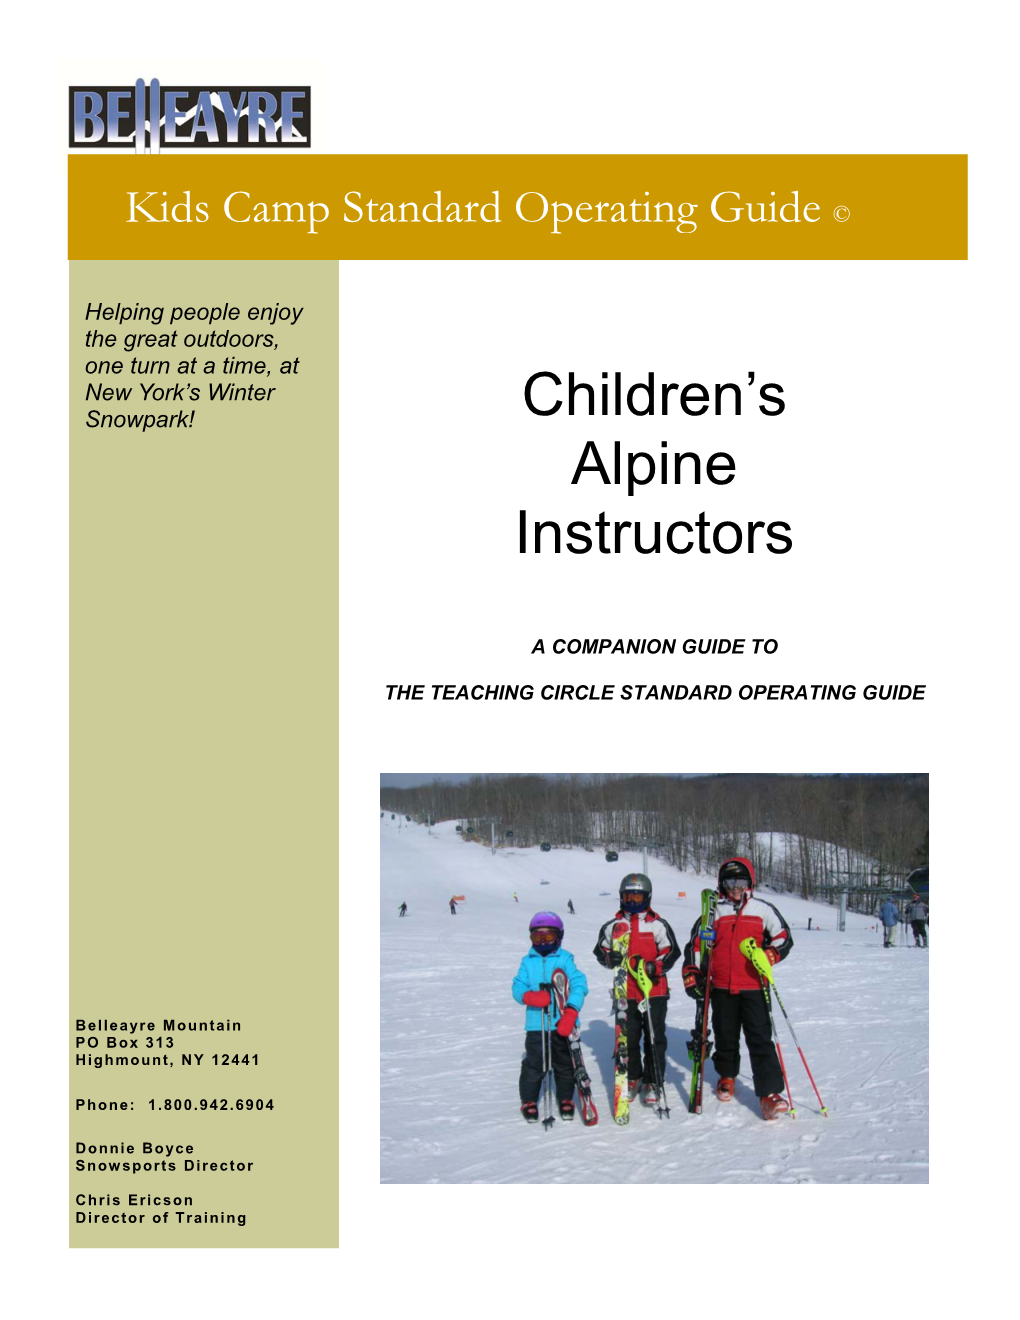 Children's Alpine Instructors